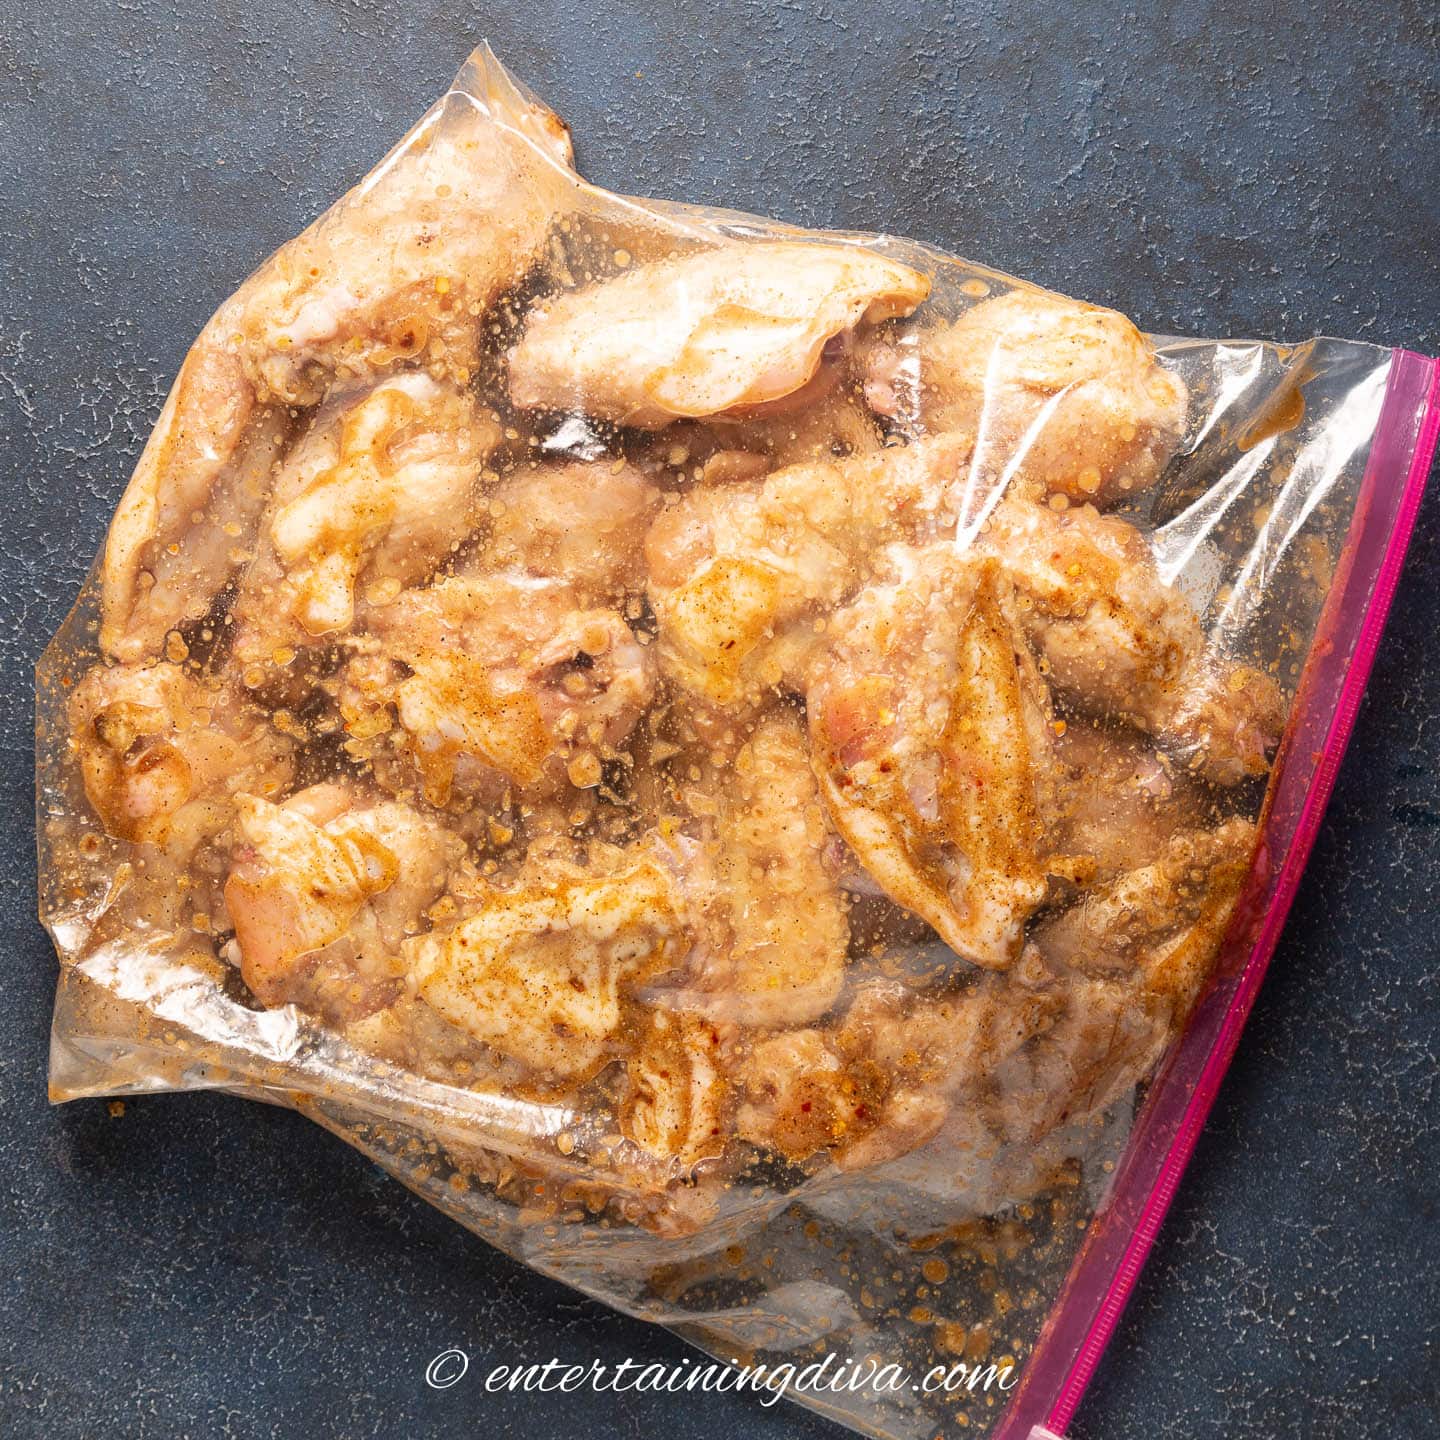 marinated wings in a Ziploc bag